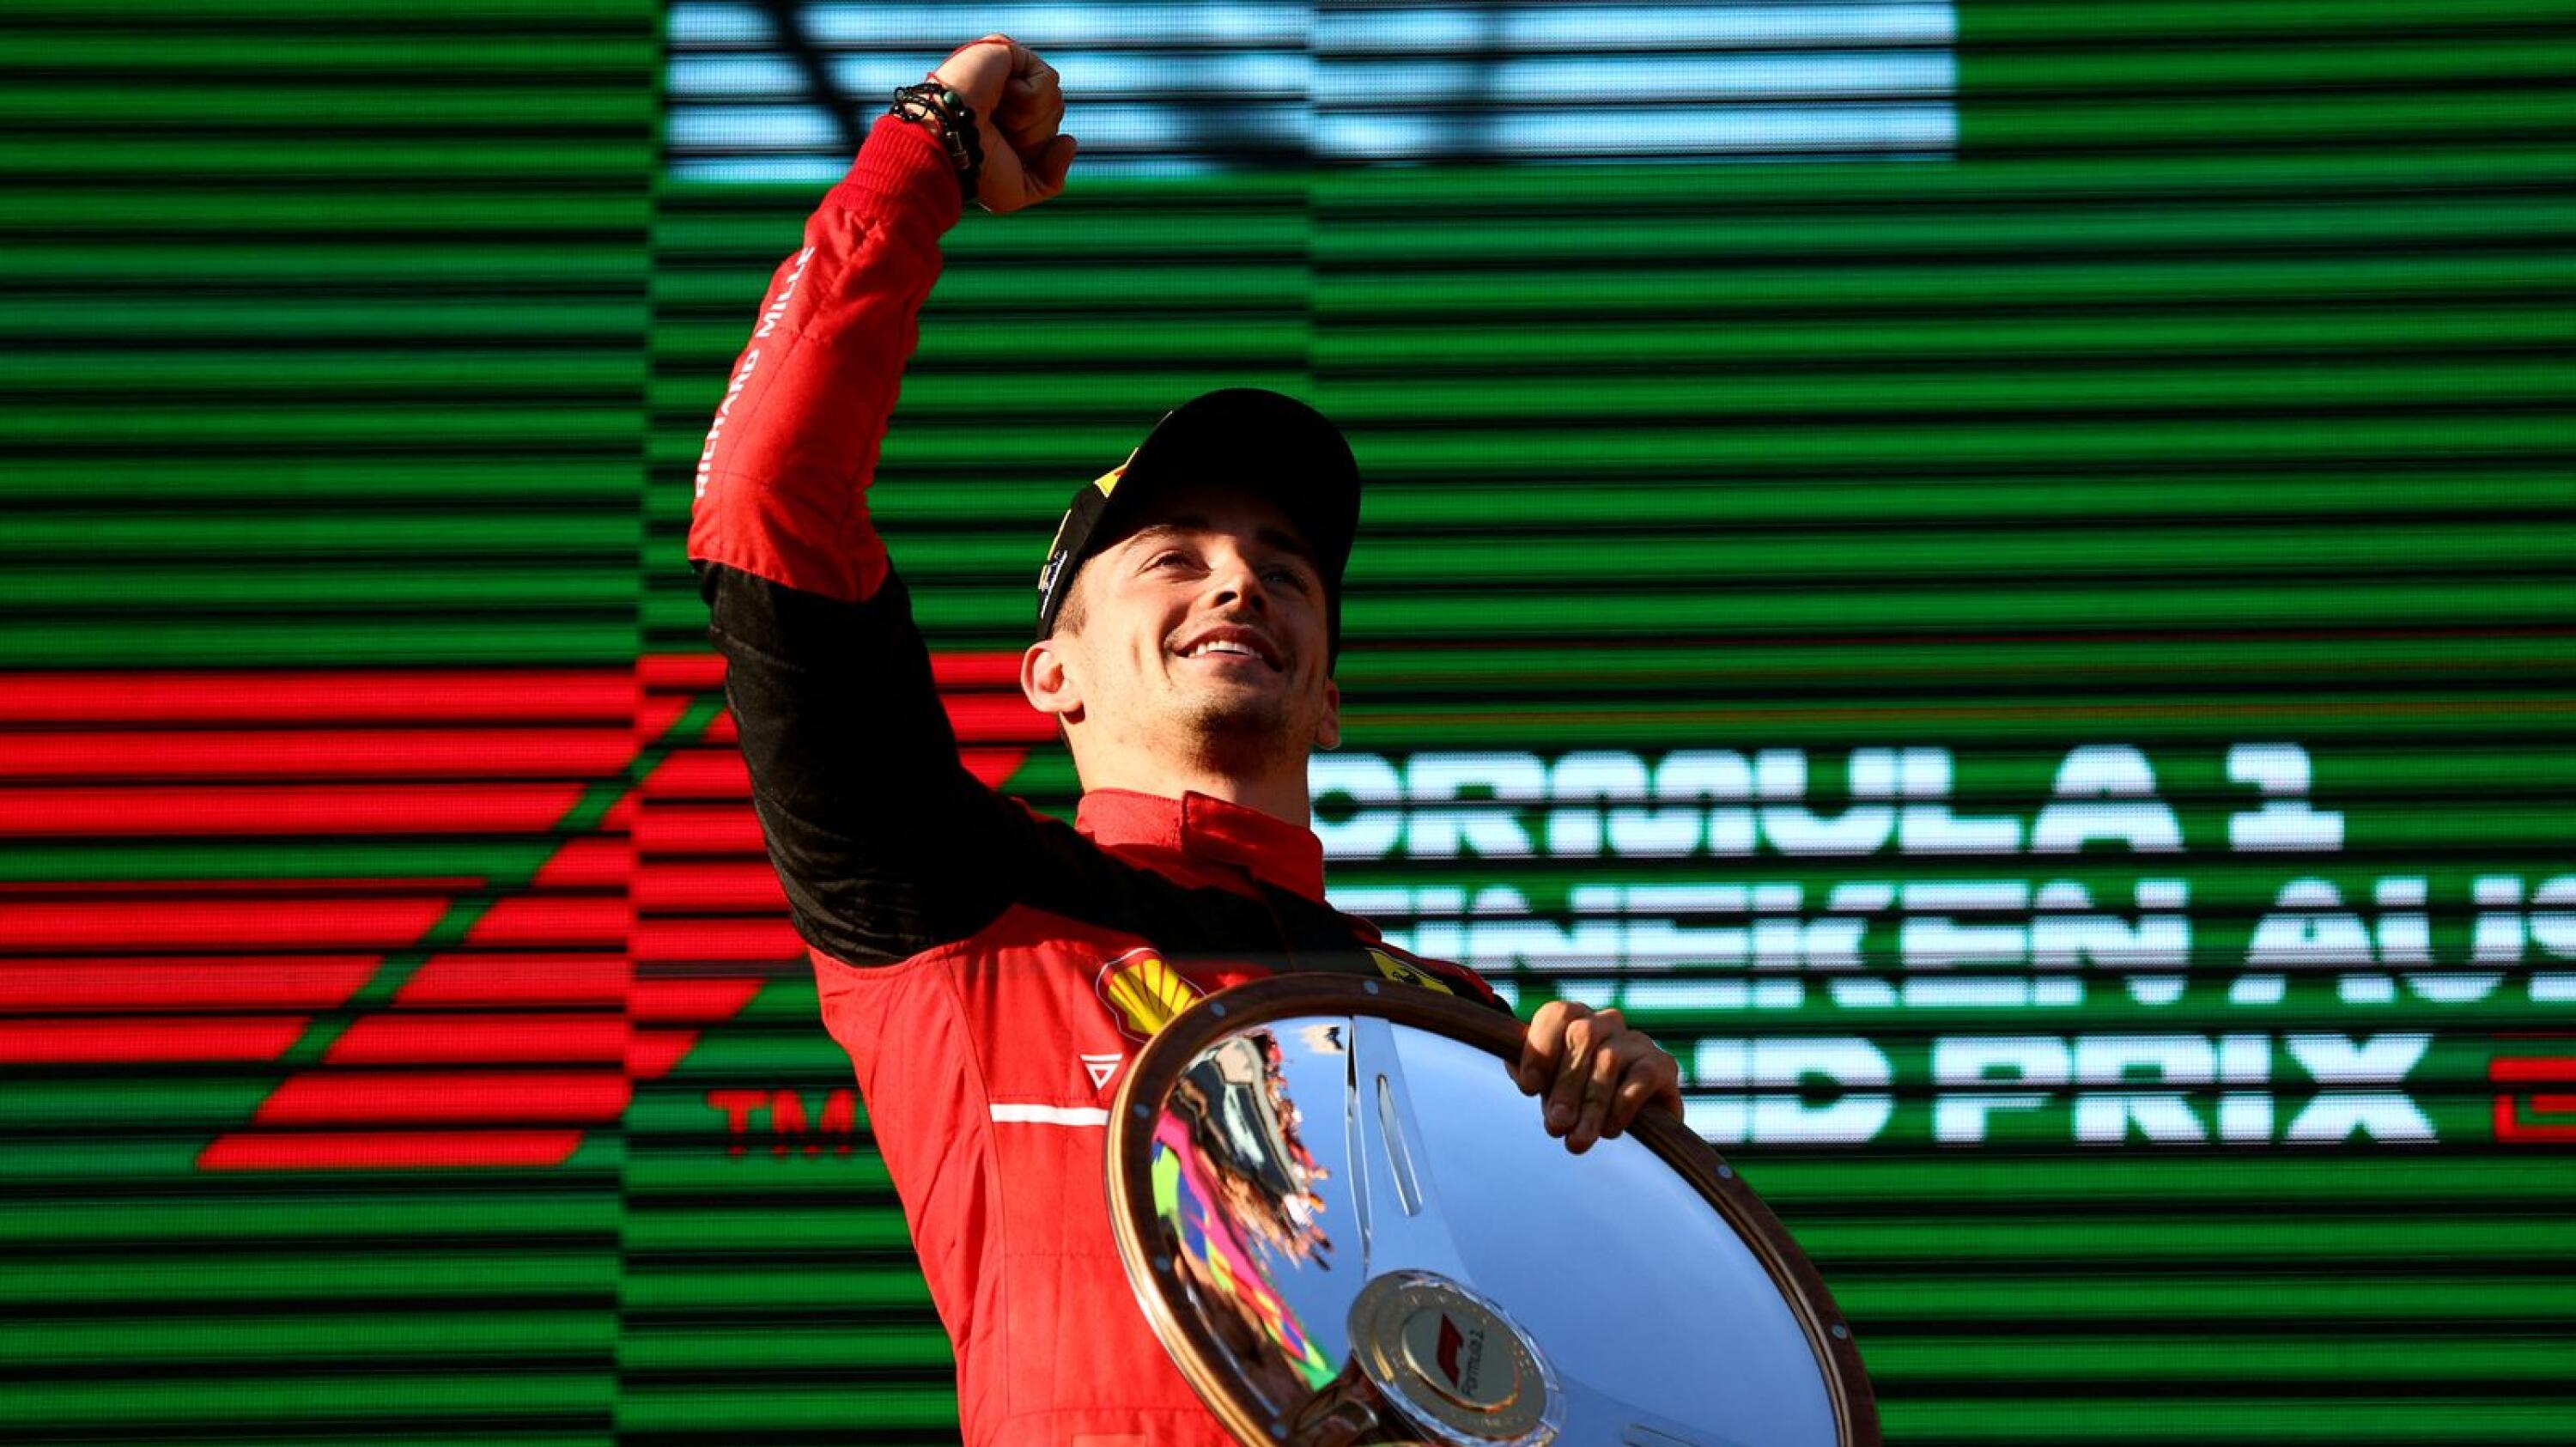 Ferrari's Charles Leclerc celebrates on the podium after winning the Australin Grand Prix on Sunday